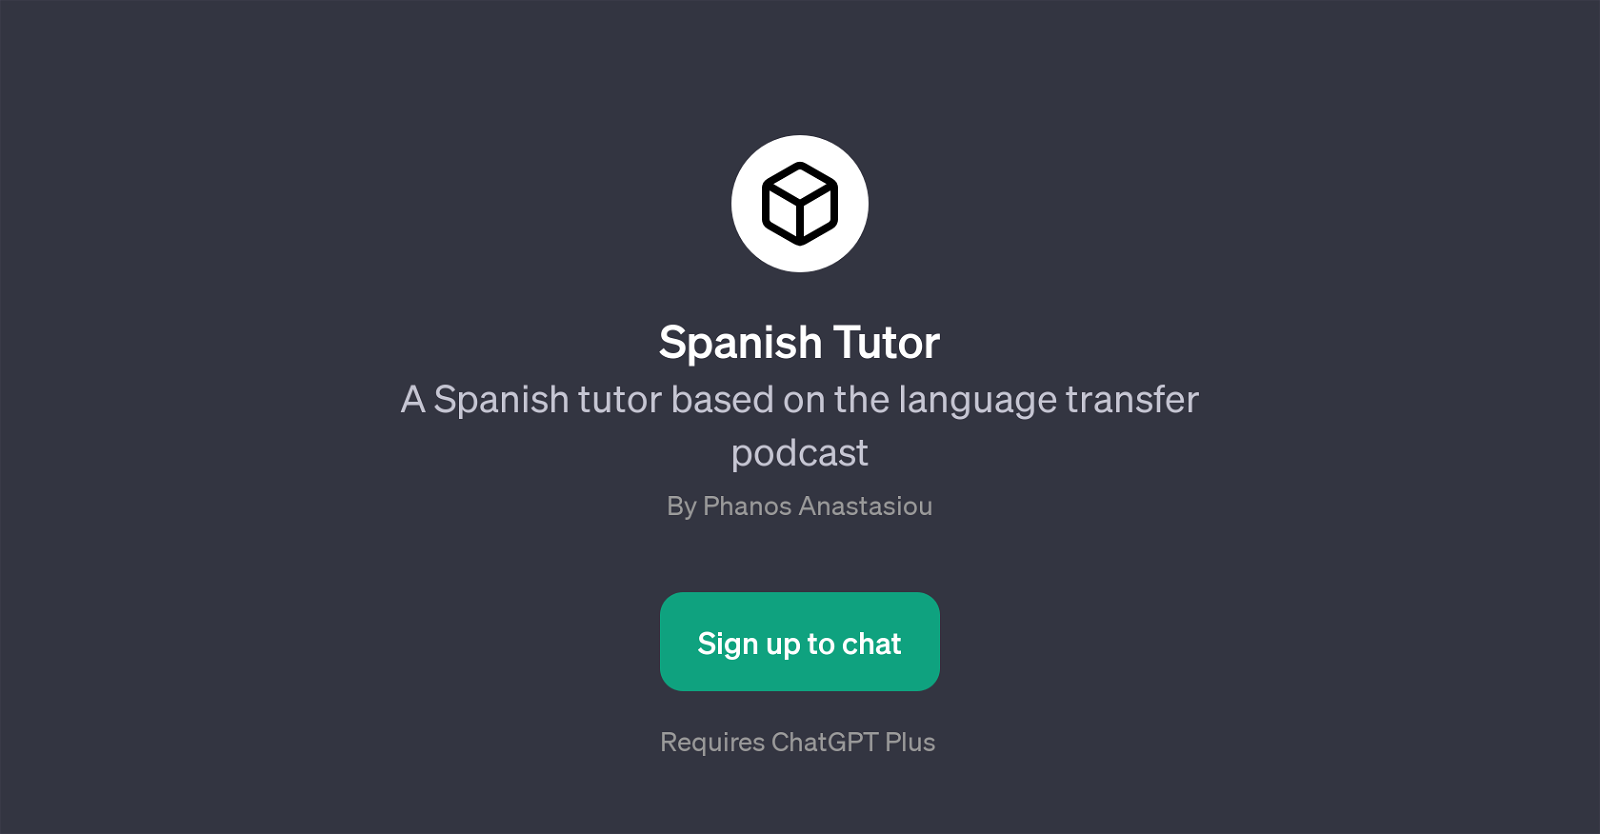 Spanish Tutor website